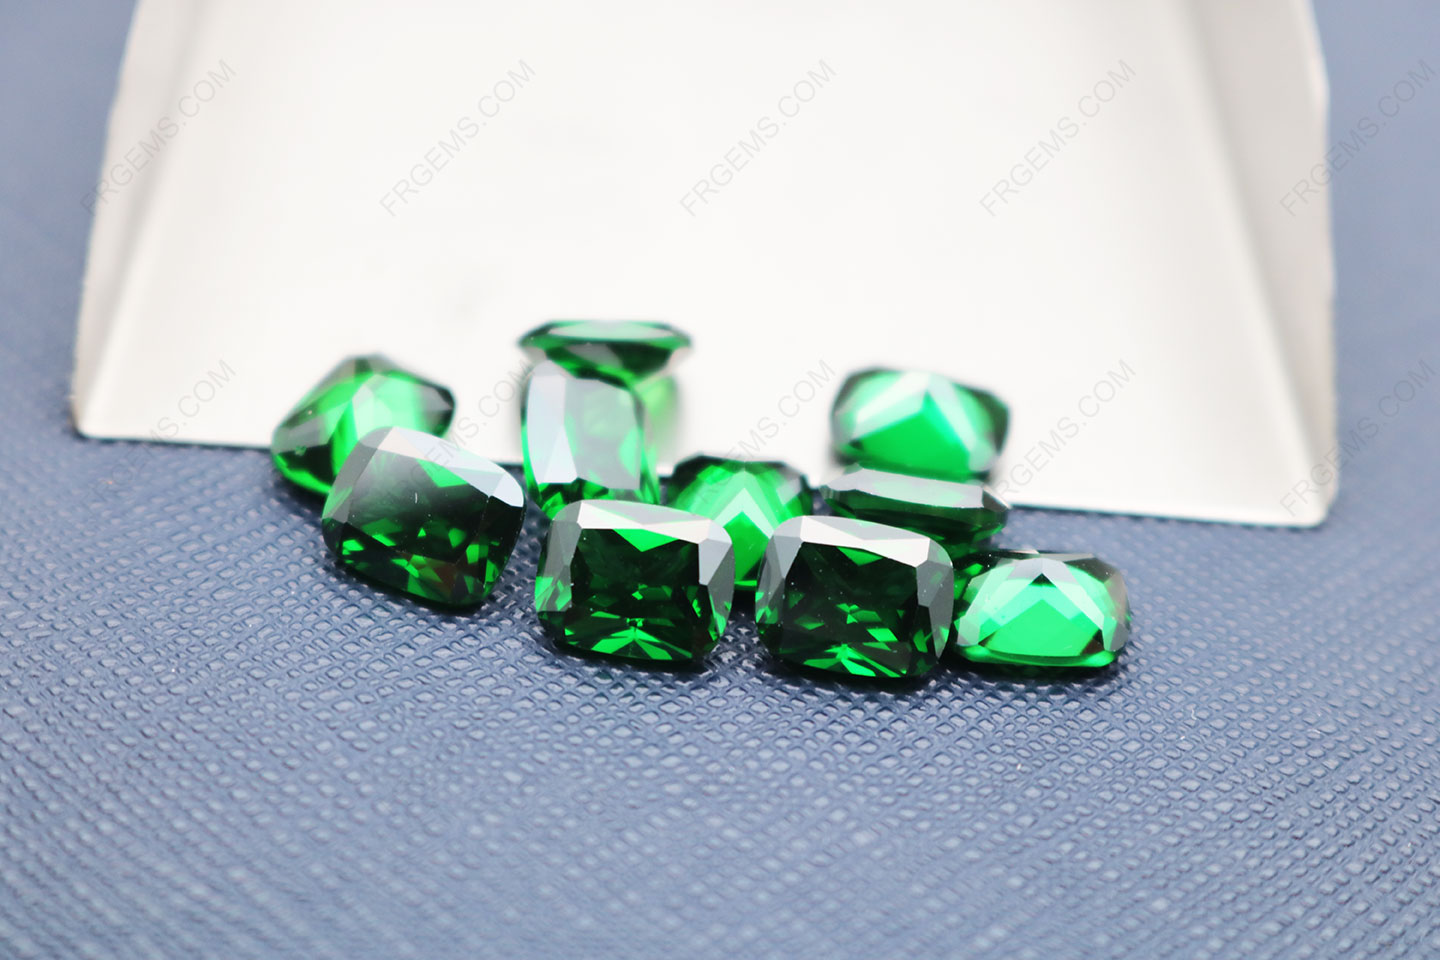 Cubic Zirconia Green Color Elongate Cushion Shape Princess Cut 9x7mm Loose gemstones